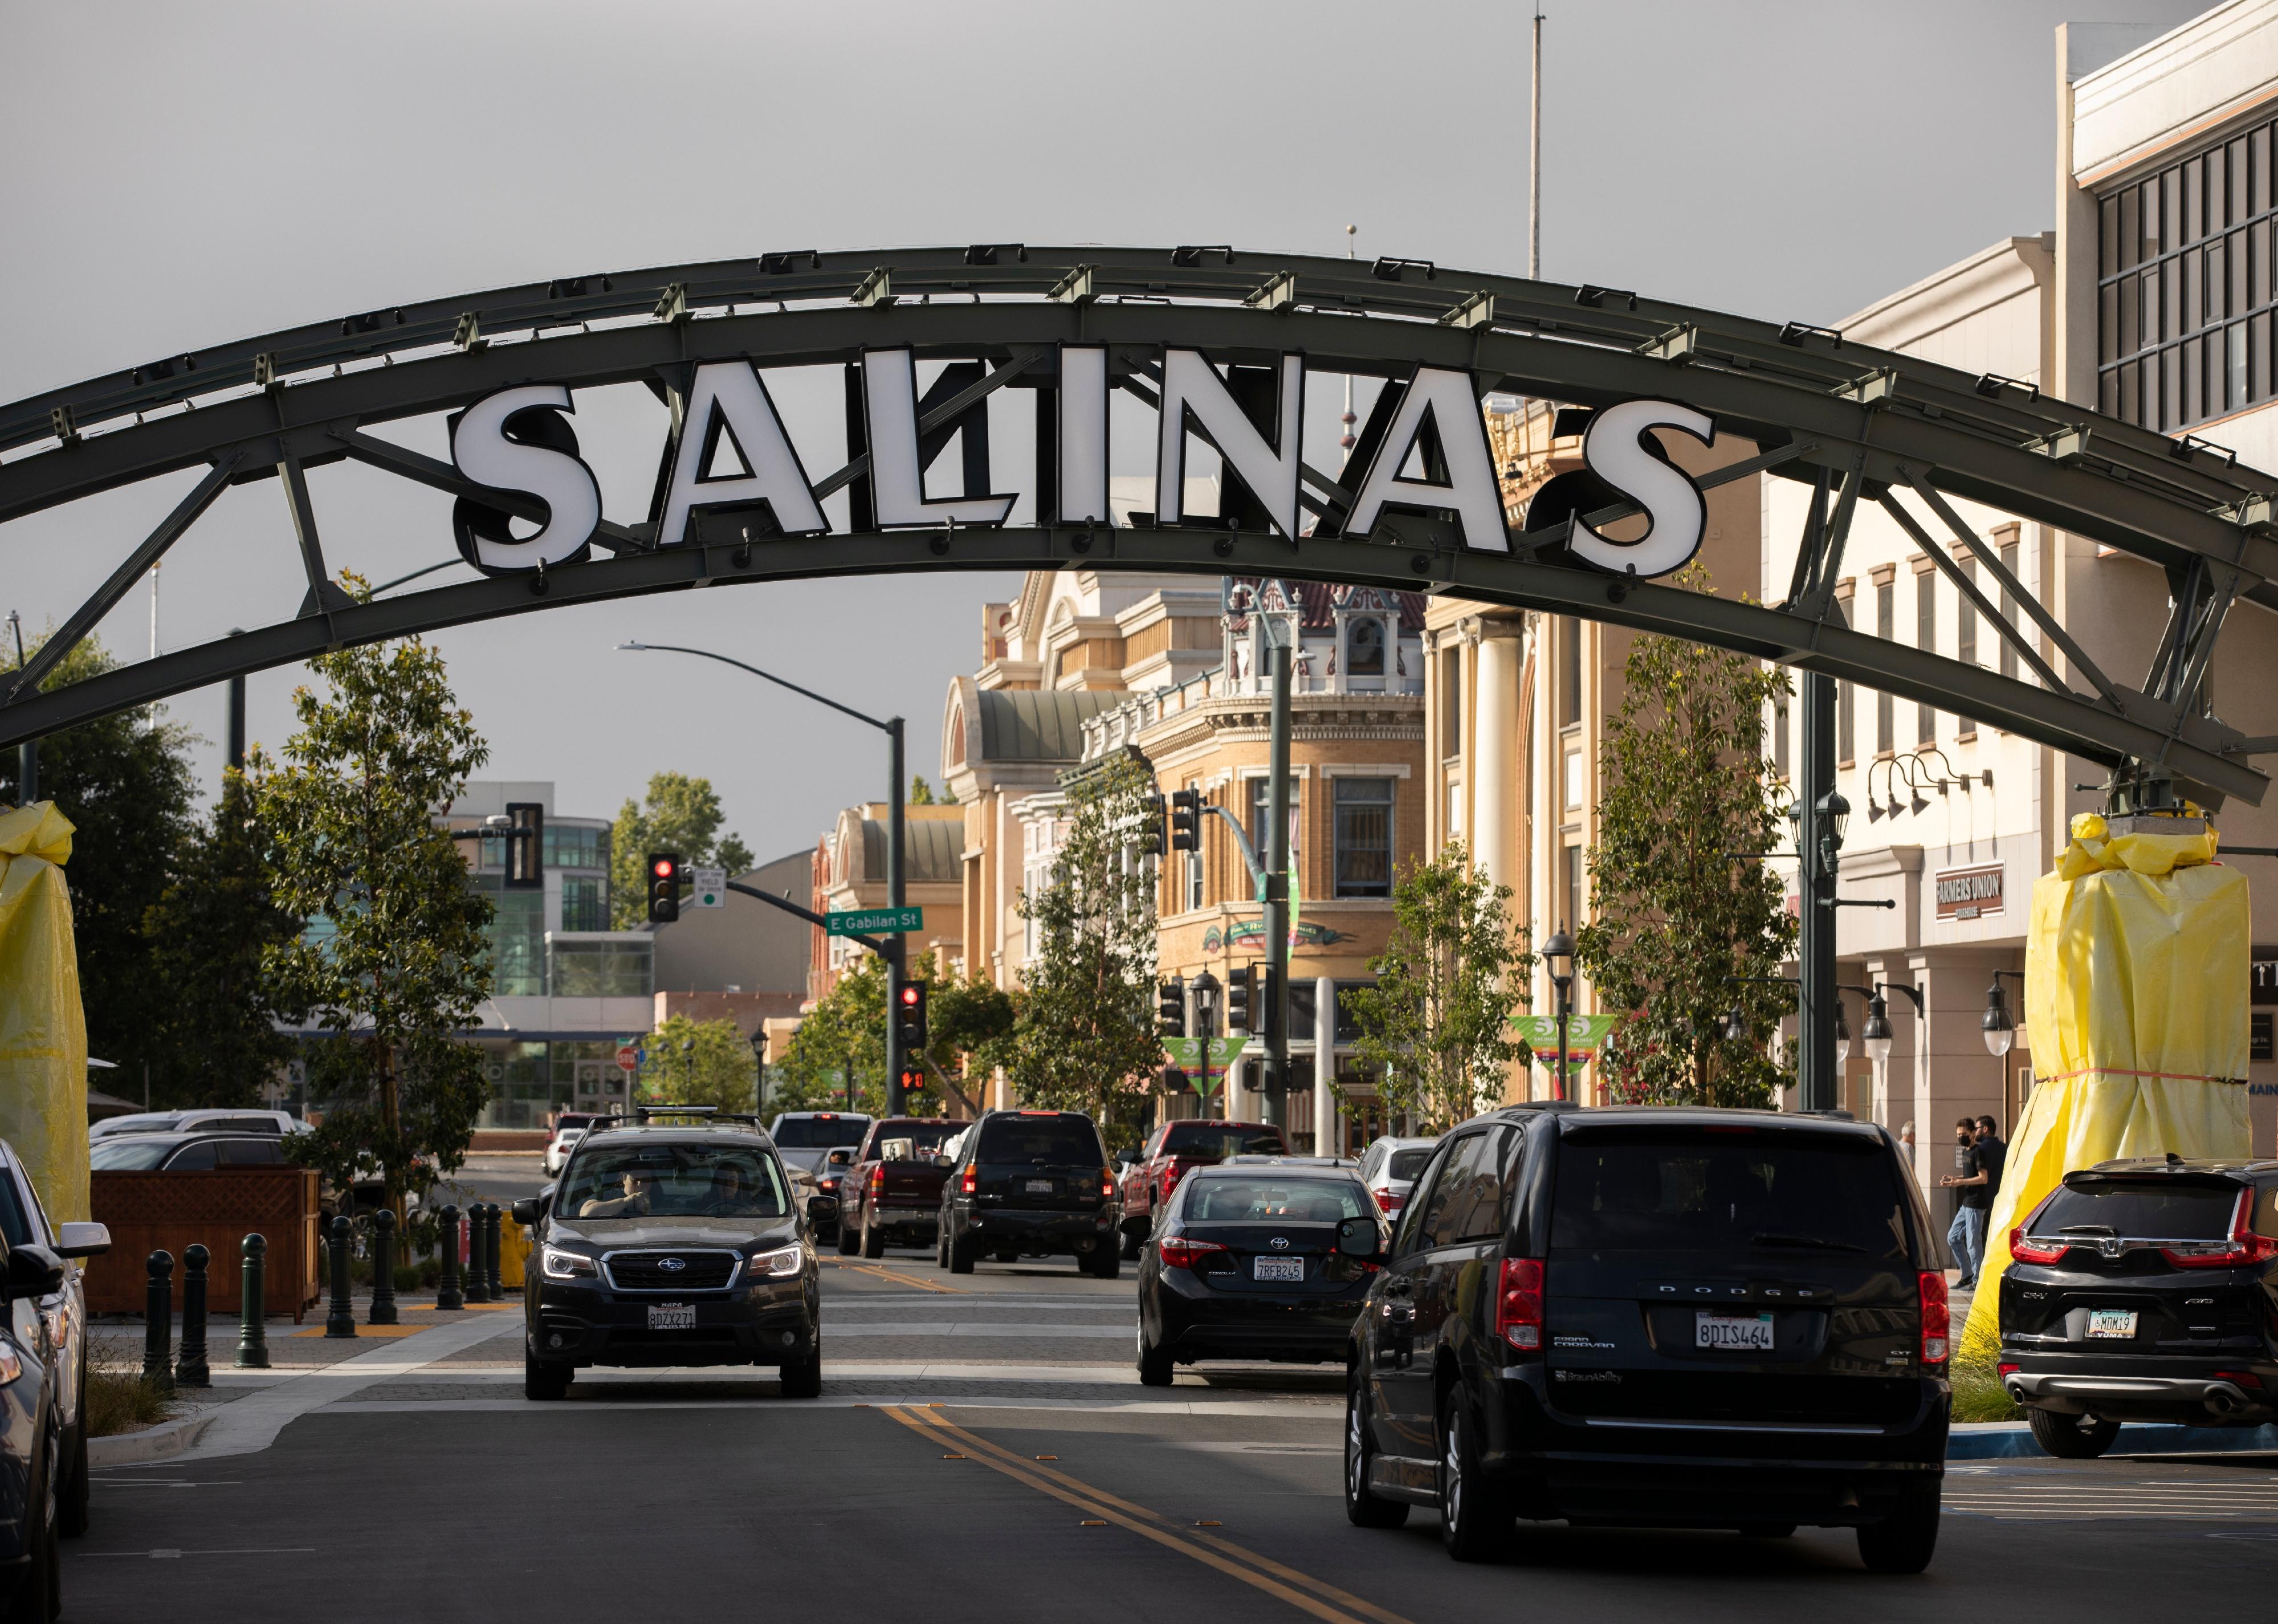 Salinas arch way in the historic city center of Salinas, California.